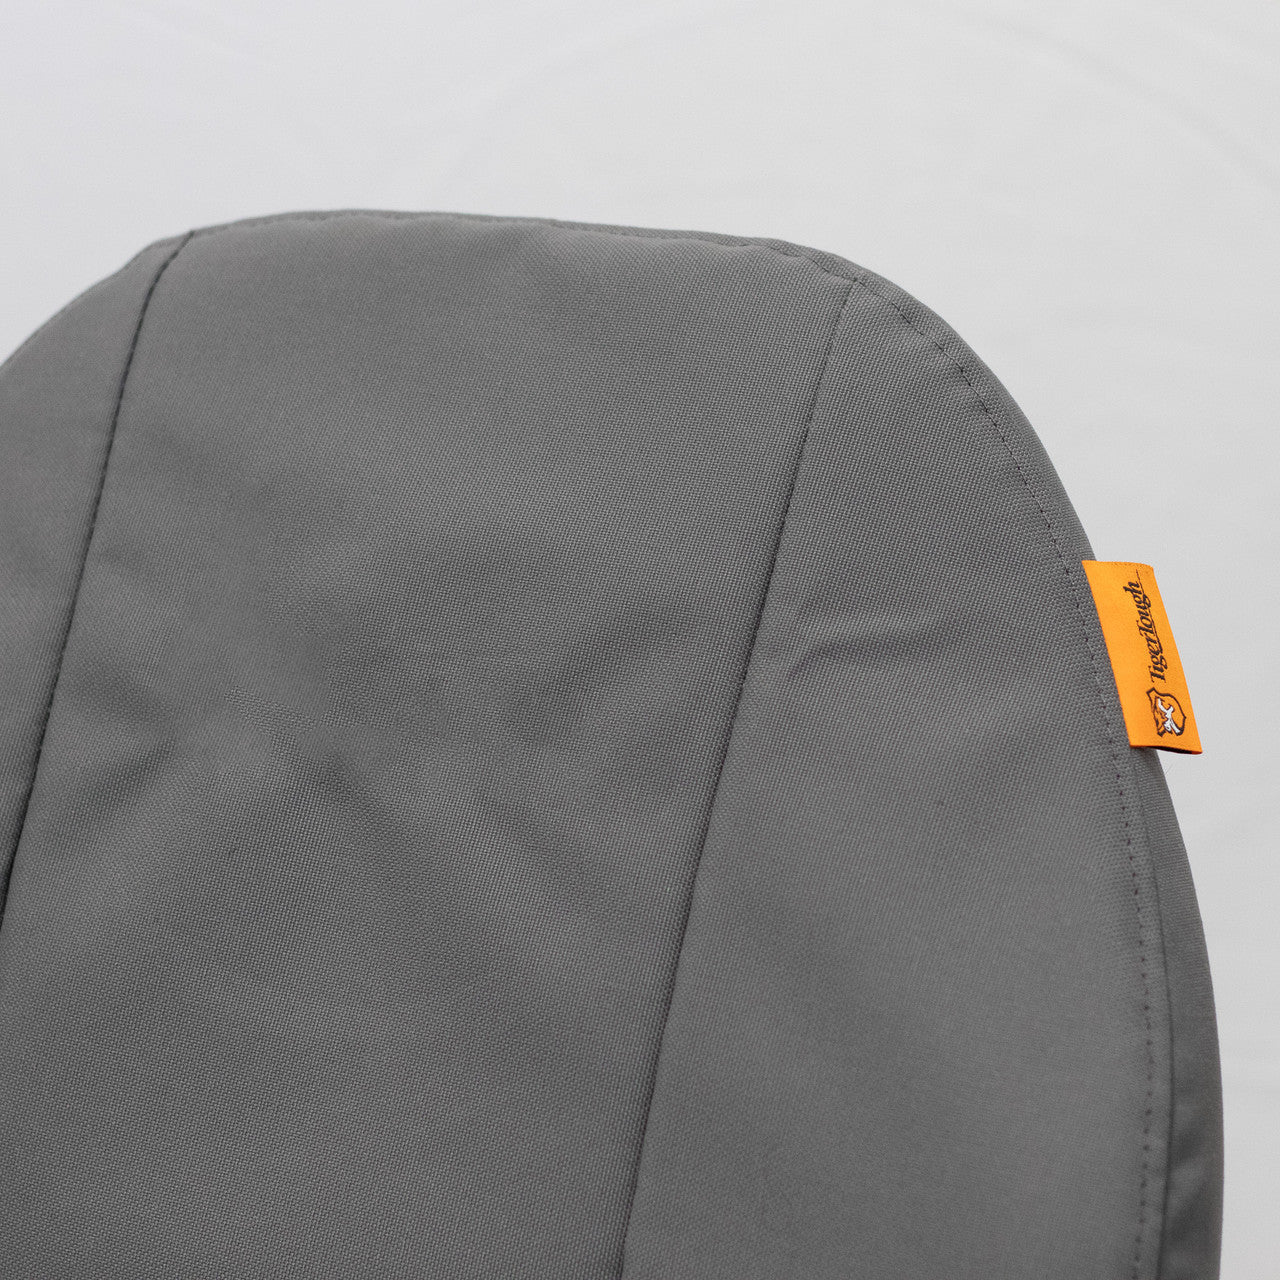 CAT D-Series Skid Loader Seat Cover